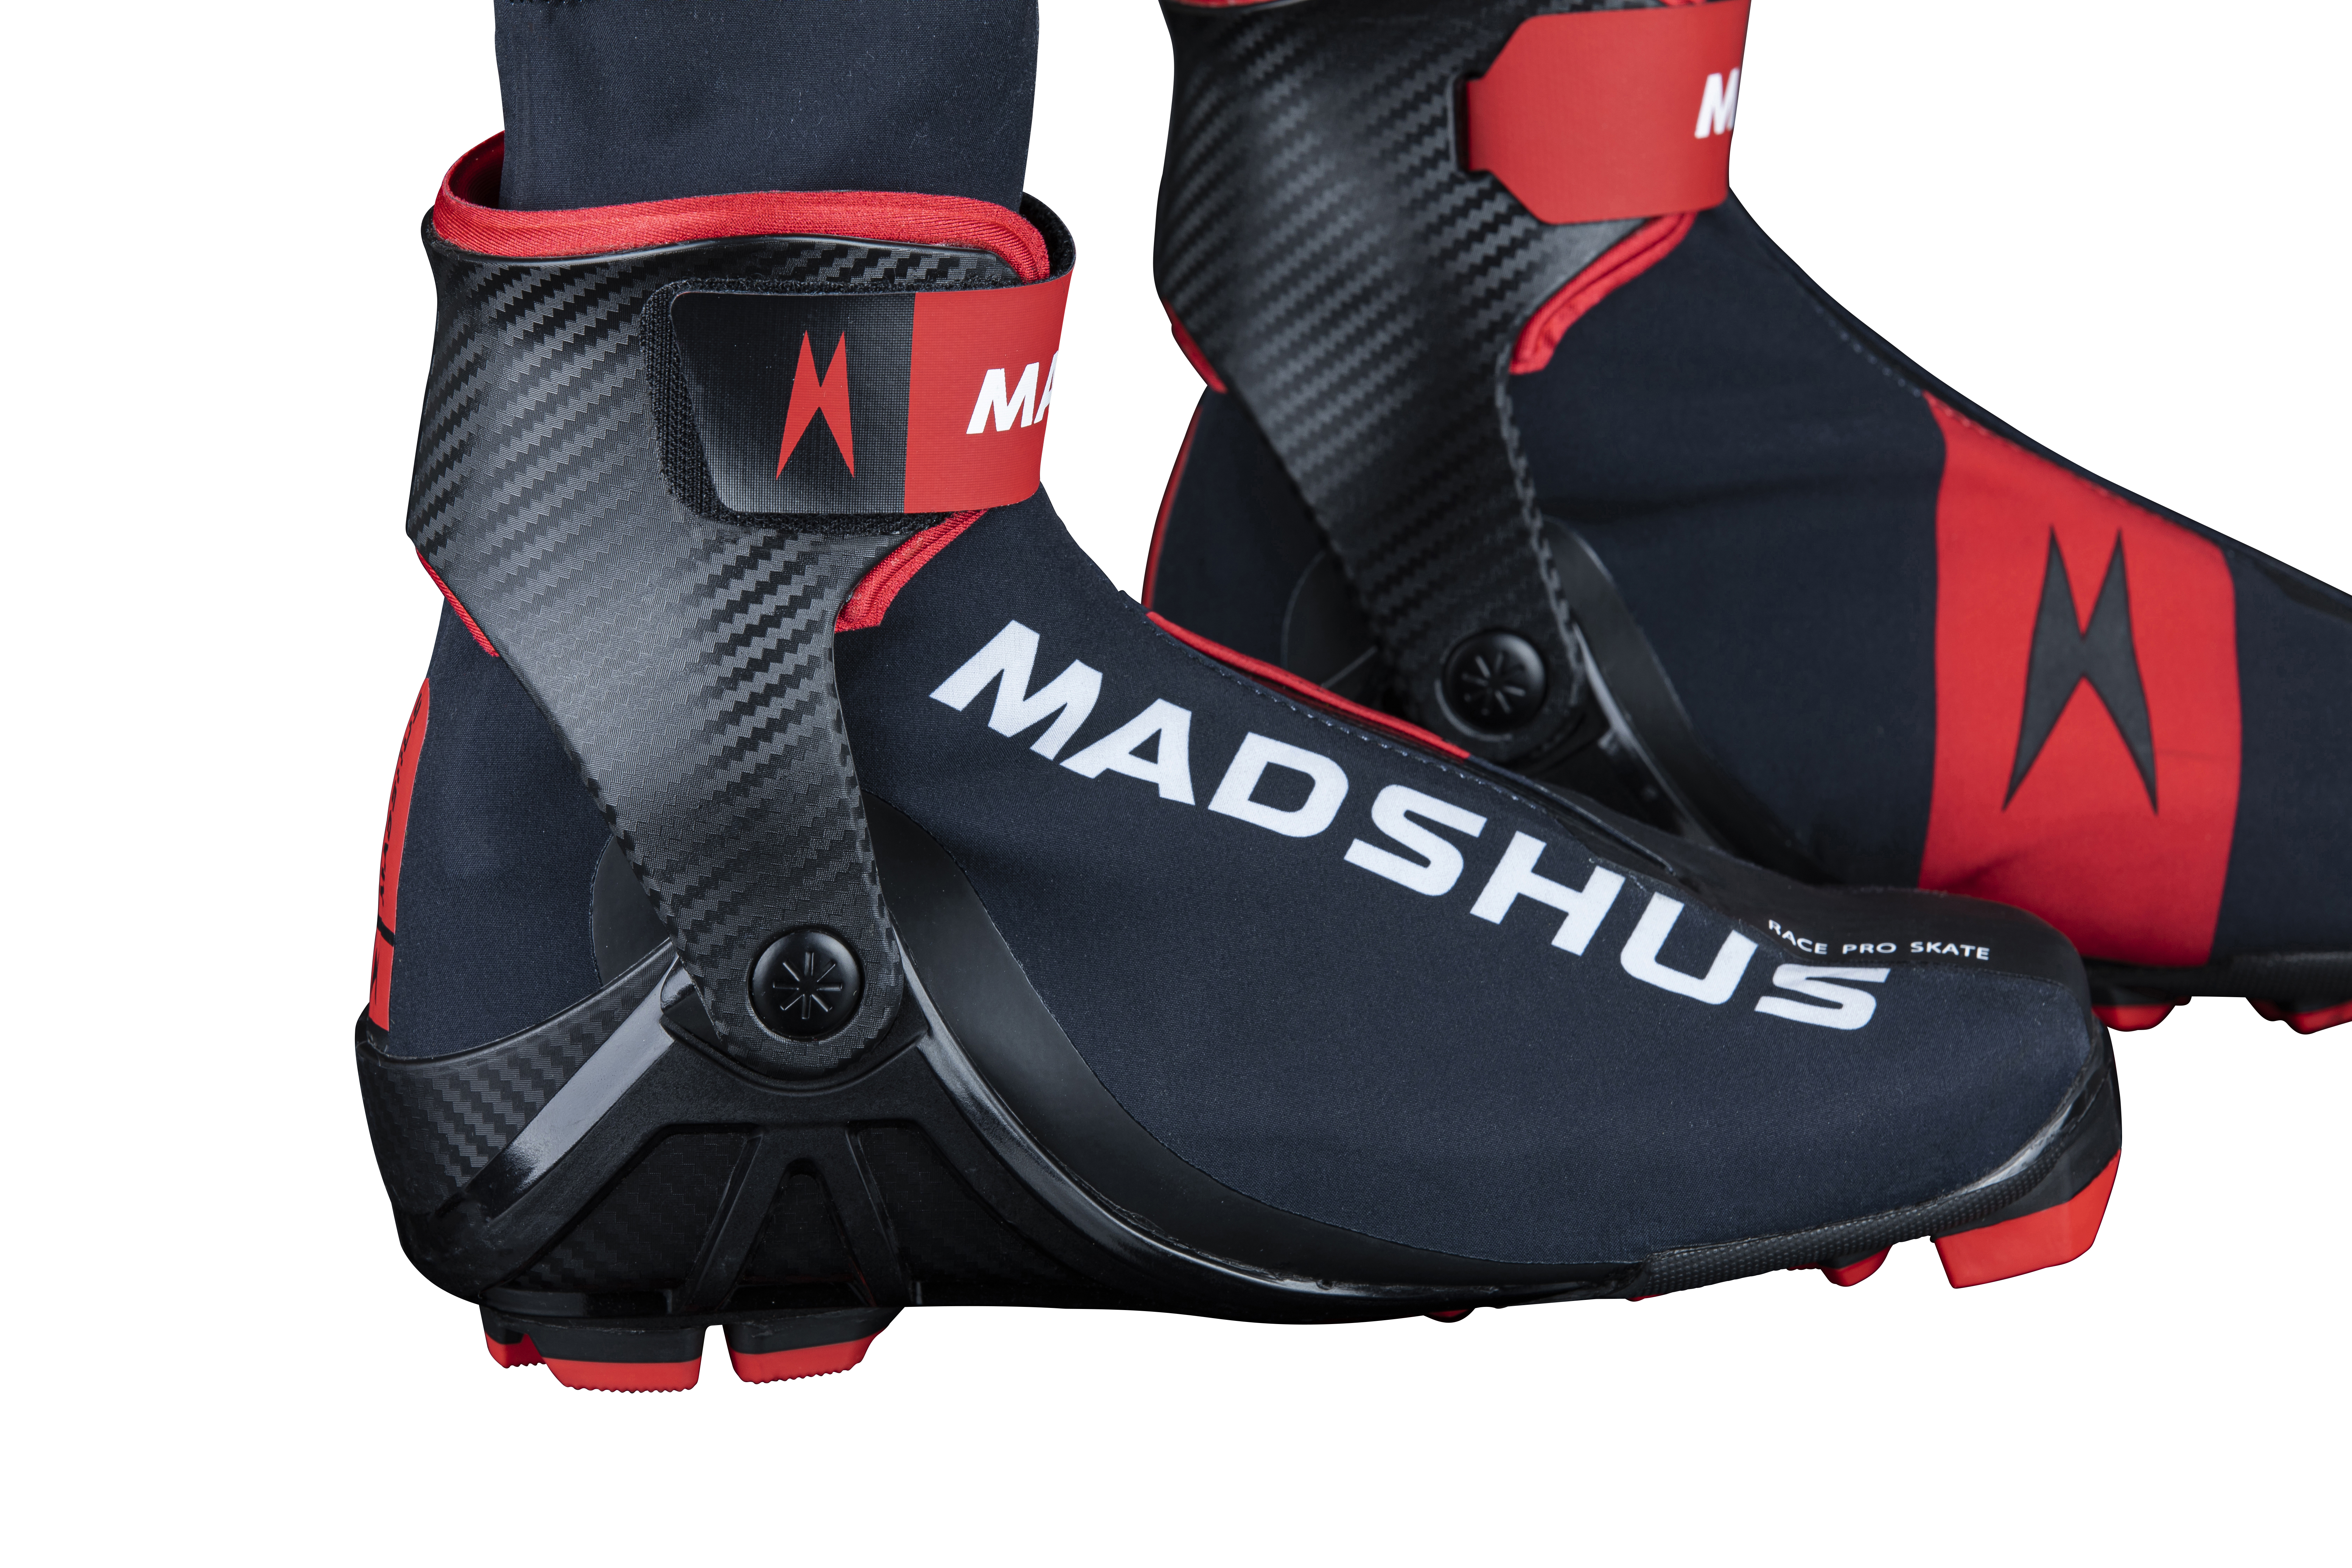 Madshus Race Pro Skate - Langlaufschuhe